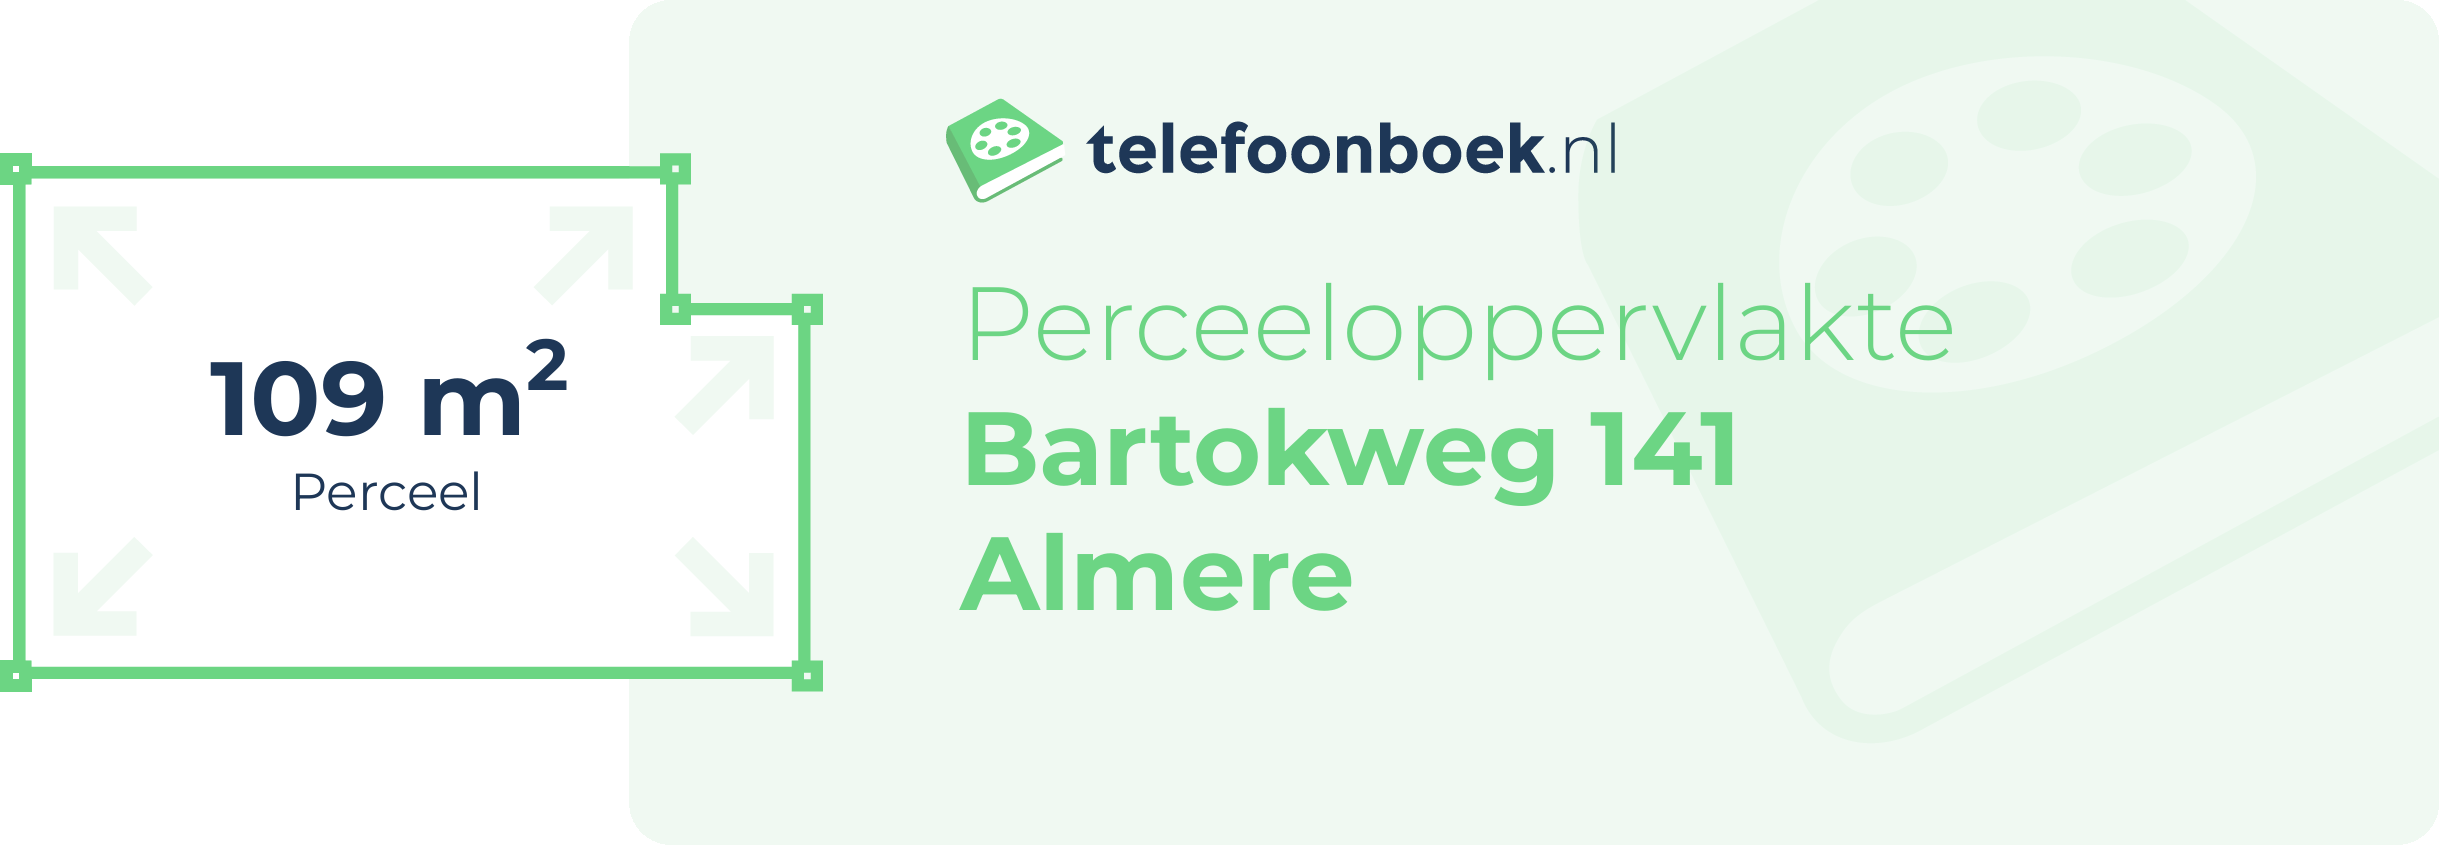 Perceeloppervlakte Bartokweg 141 Almere